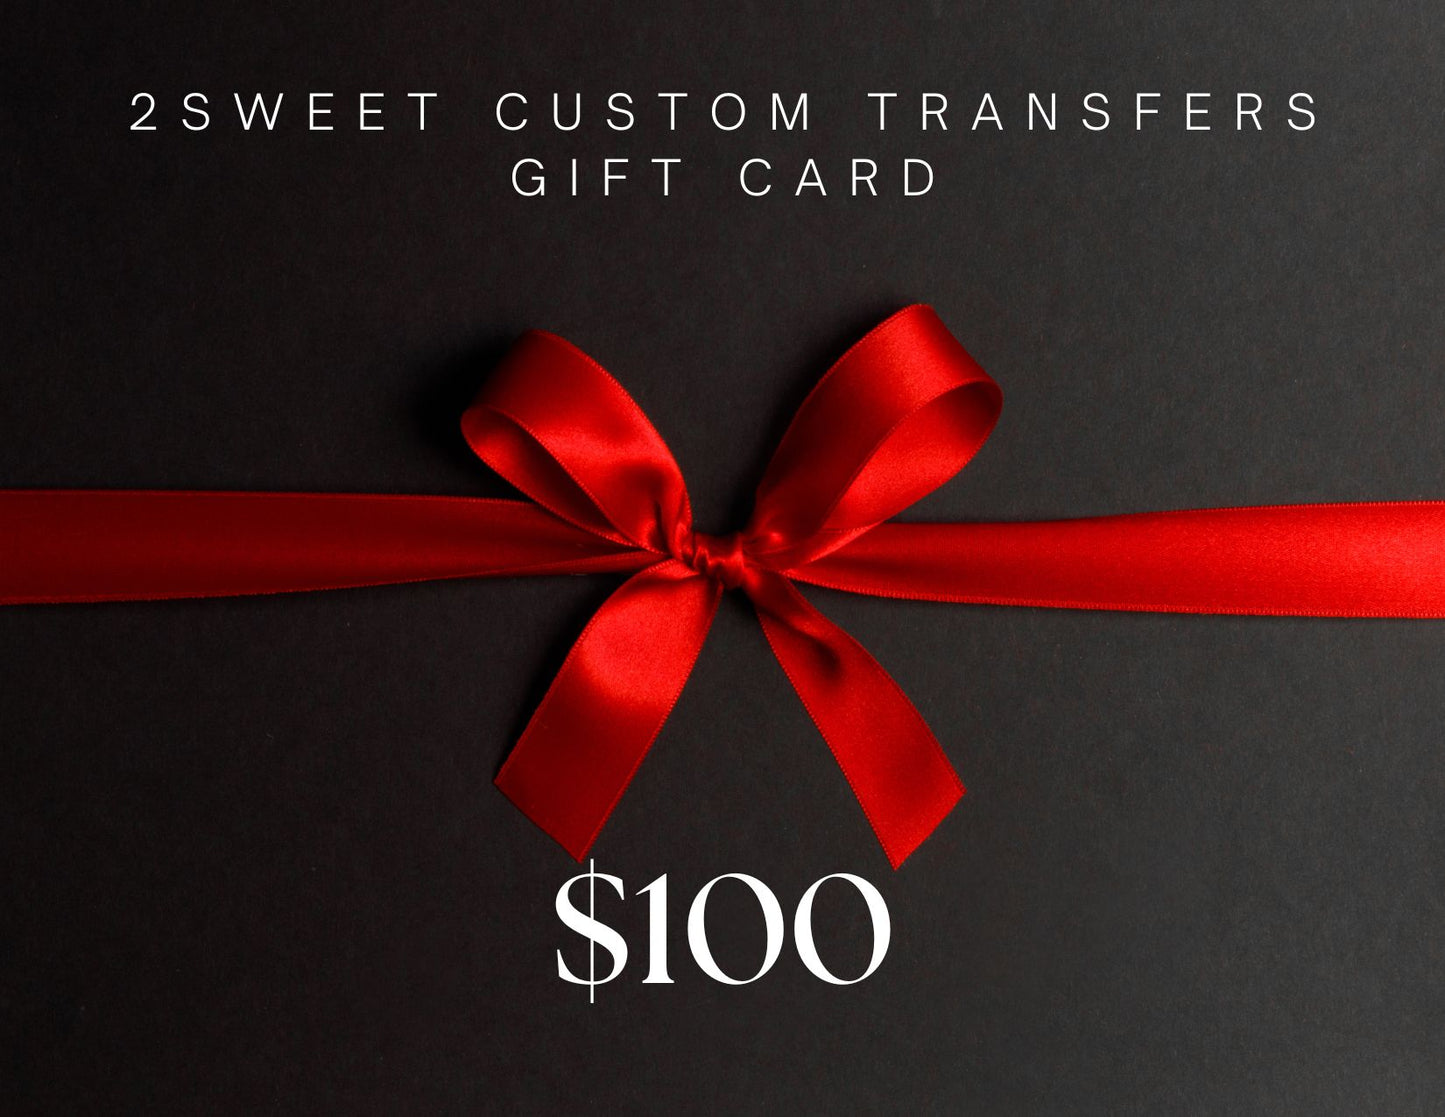 2Sweet Custom Transfers Gift Card